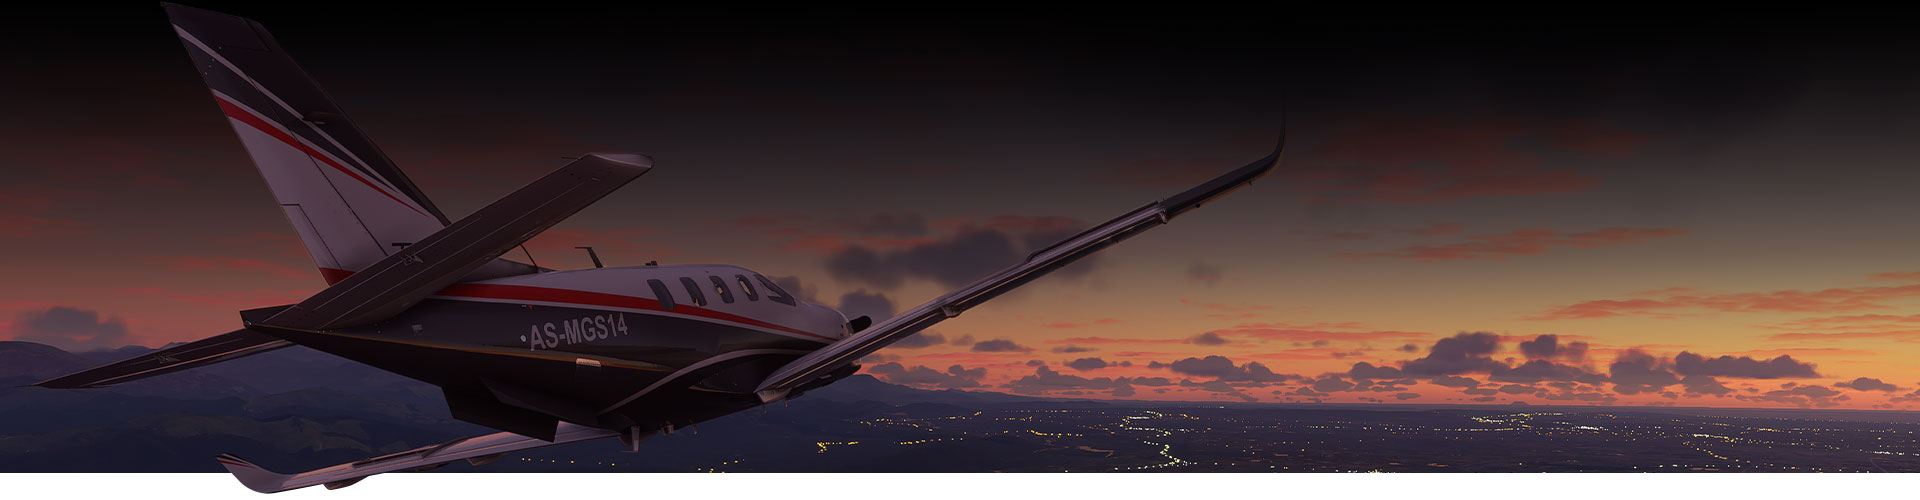 Fly fra Microsoft Flight Simulator, der flyver over en by ved solnedgang